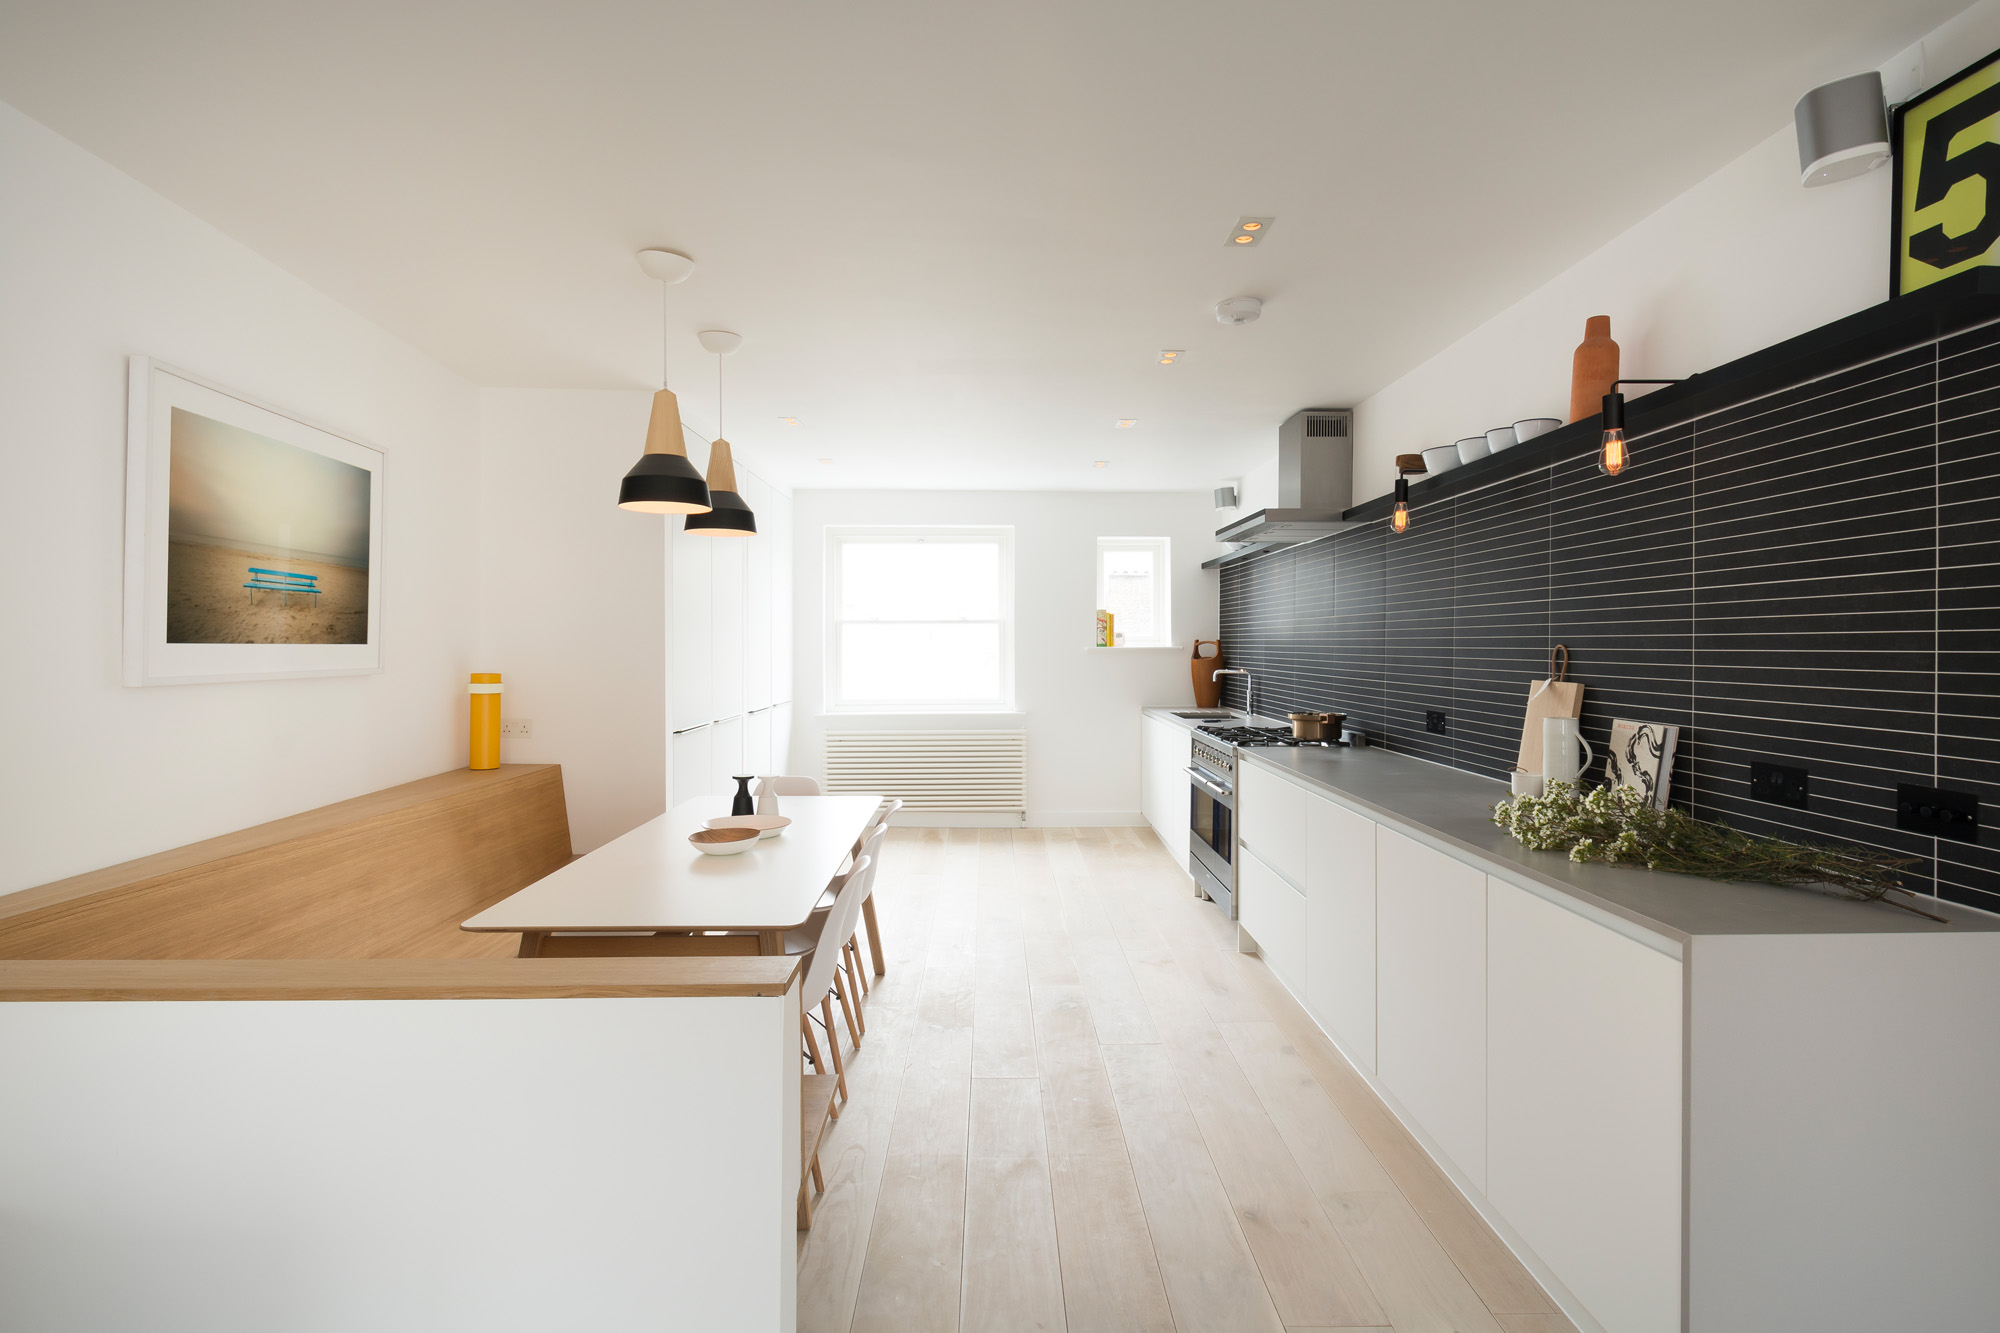 For Rent: Westbourne Gardens Bayswater W2 minimalist kitchen with contemporary design